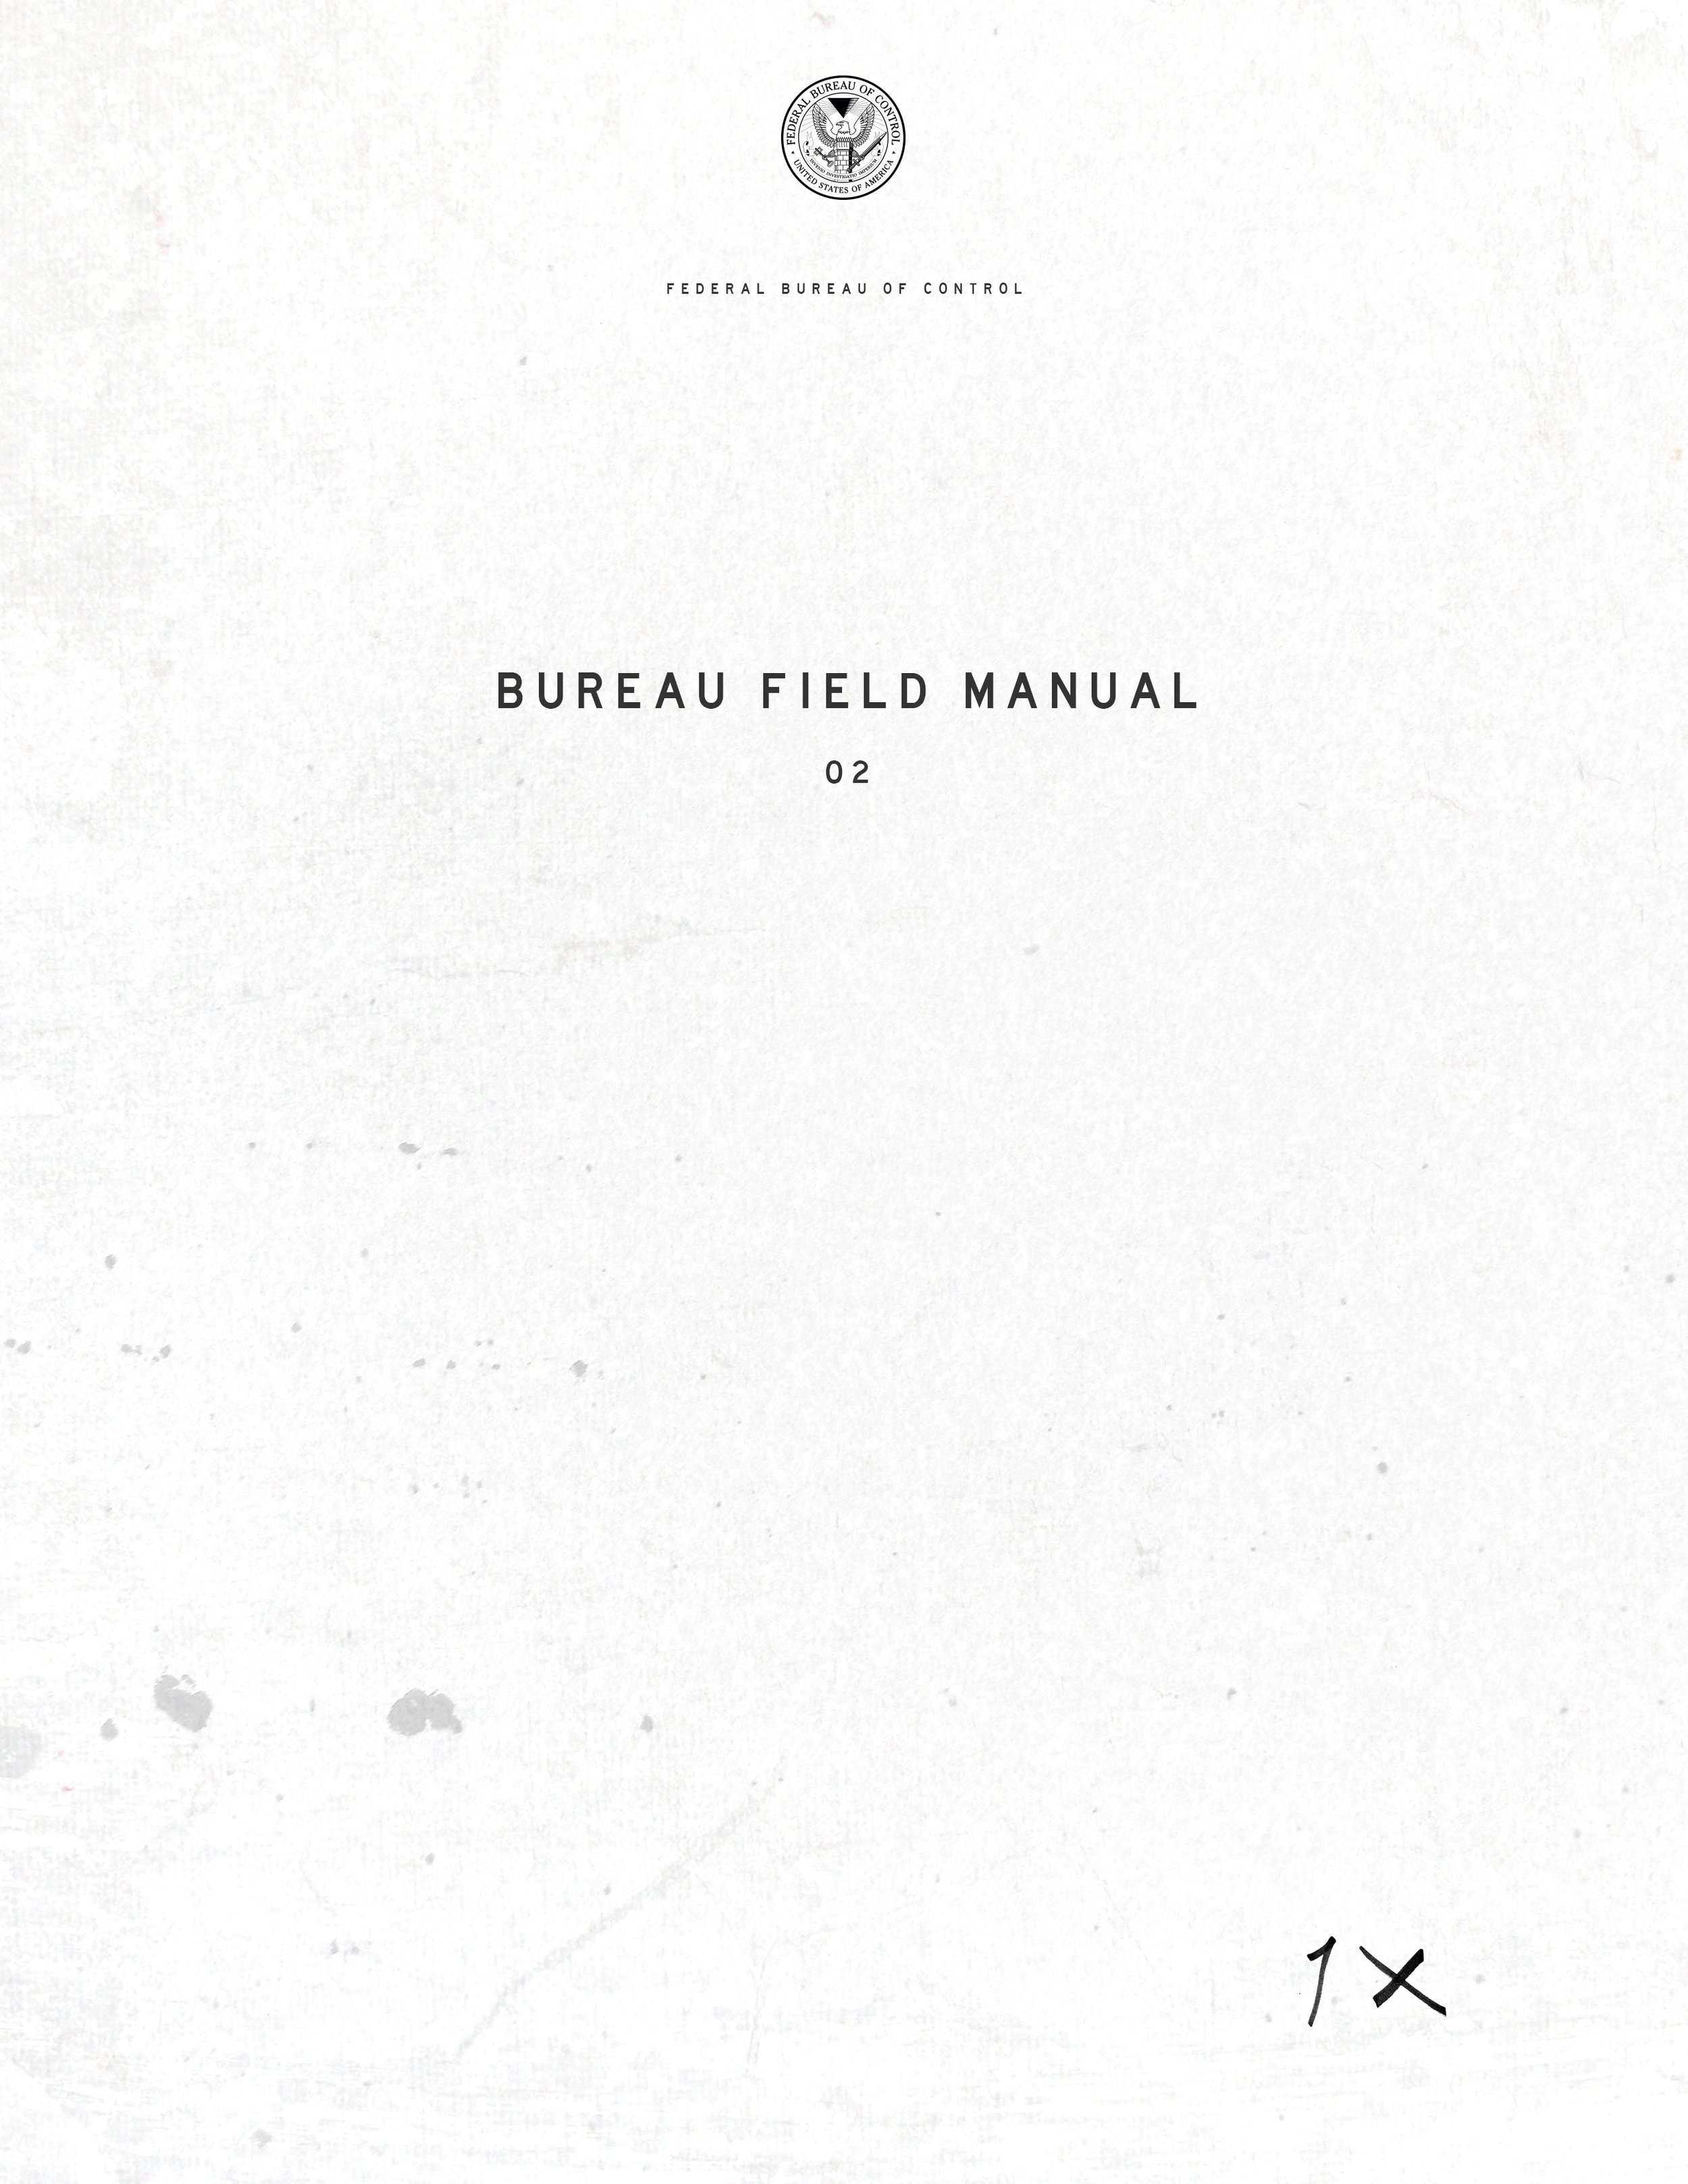 FieldManual_01.jpg